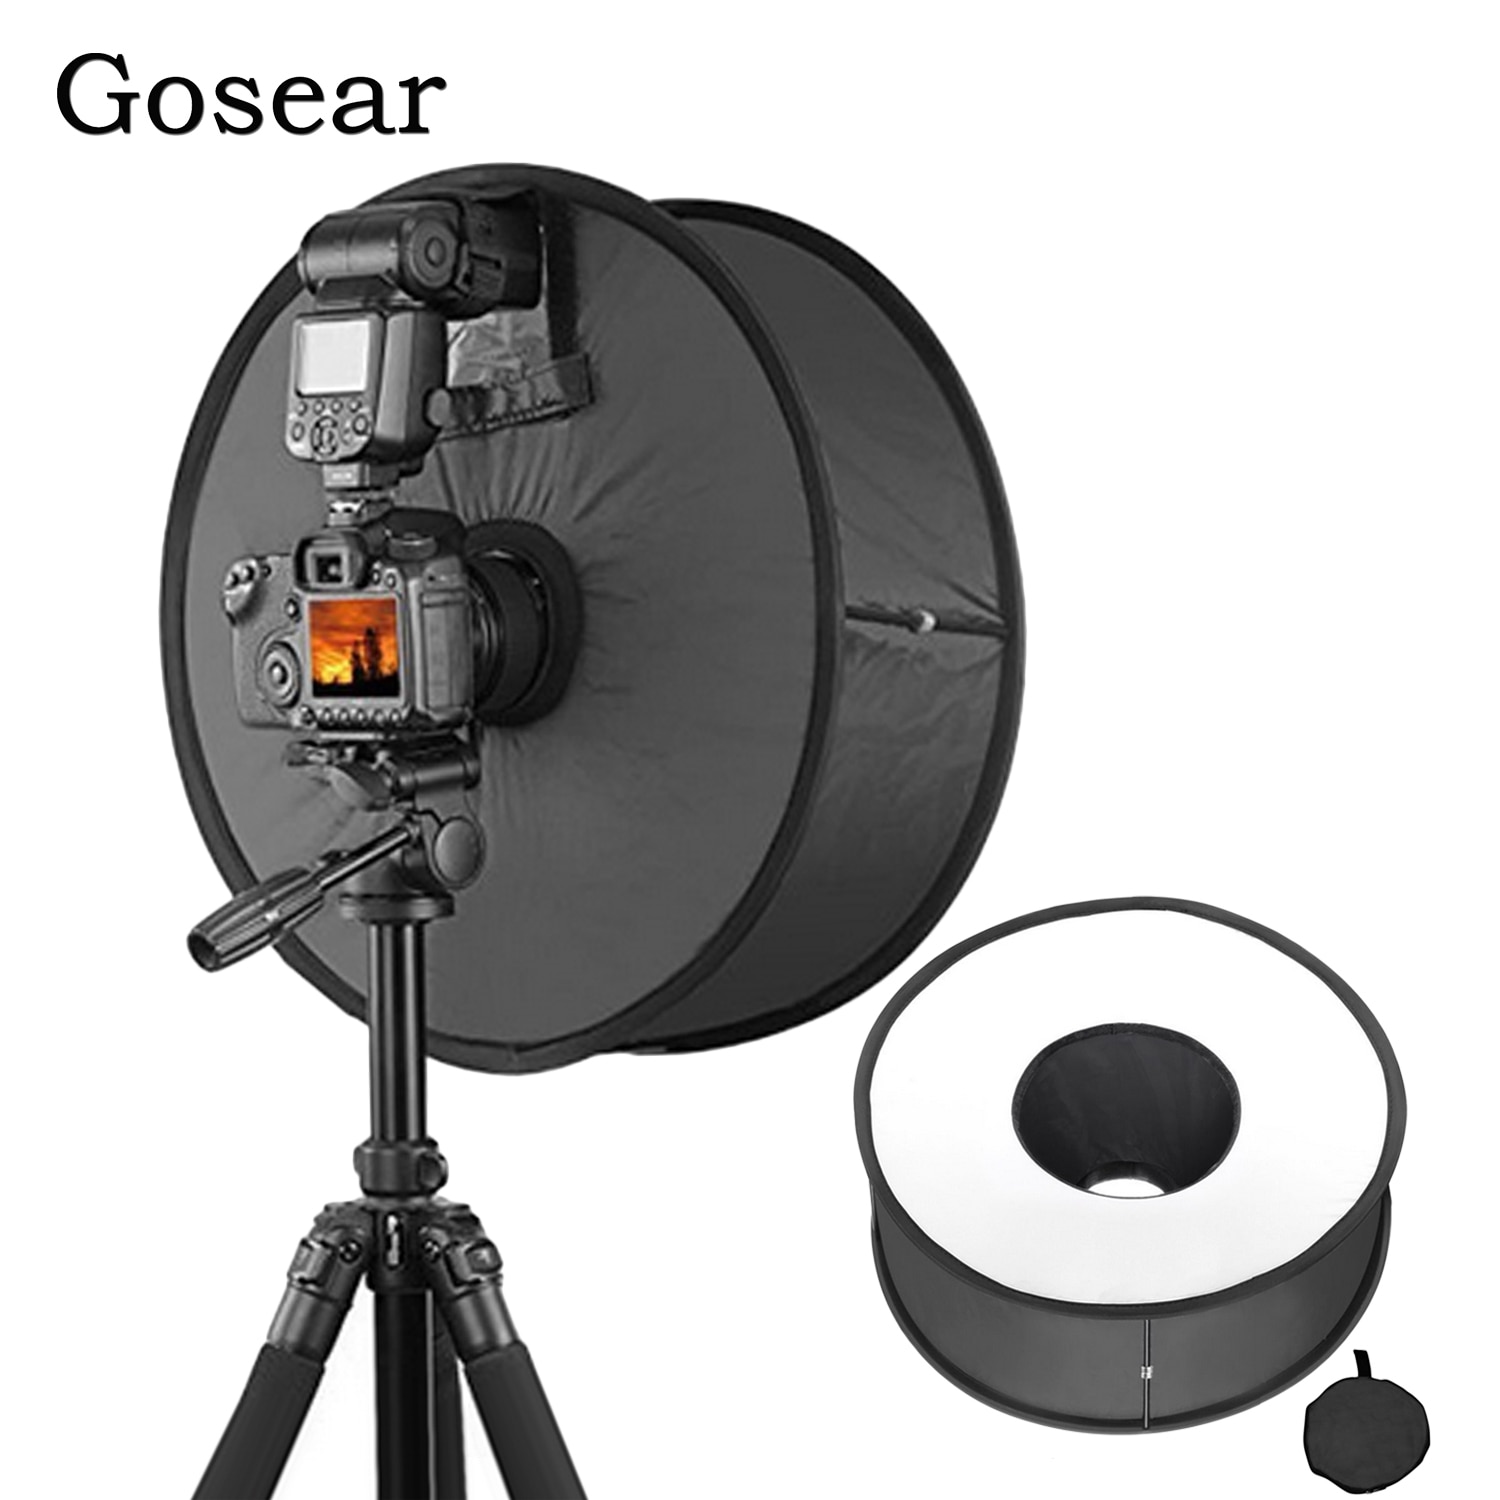 Gosear 45 cm Vouwen Ronde Ring Speedlite Flash Softbox Diffuser Reflector Voor Canon Nikon Godox Macro Schieten Portret Fotografie